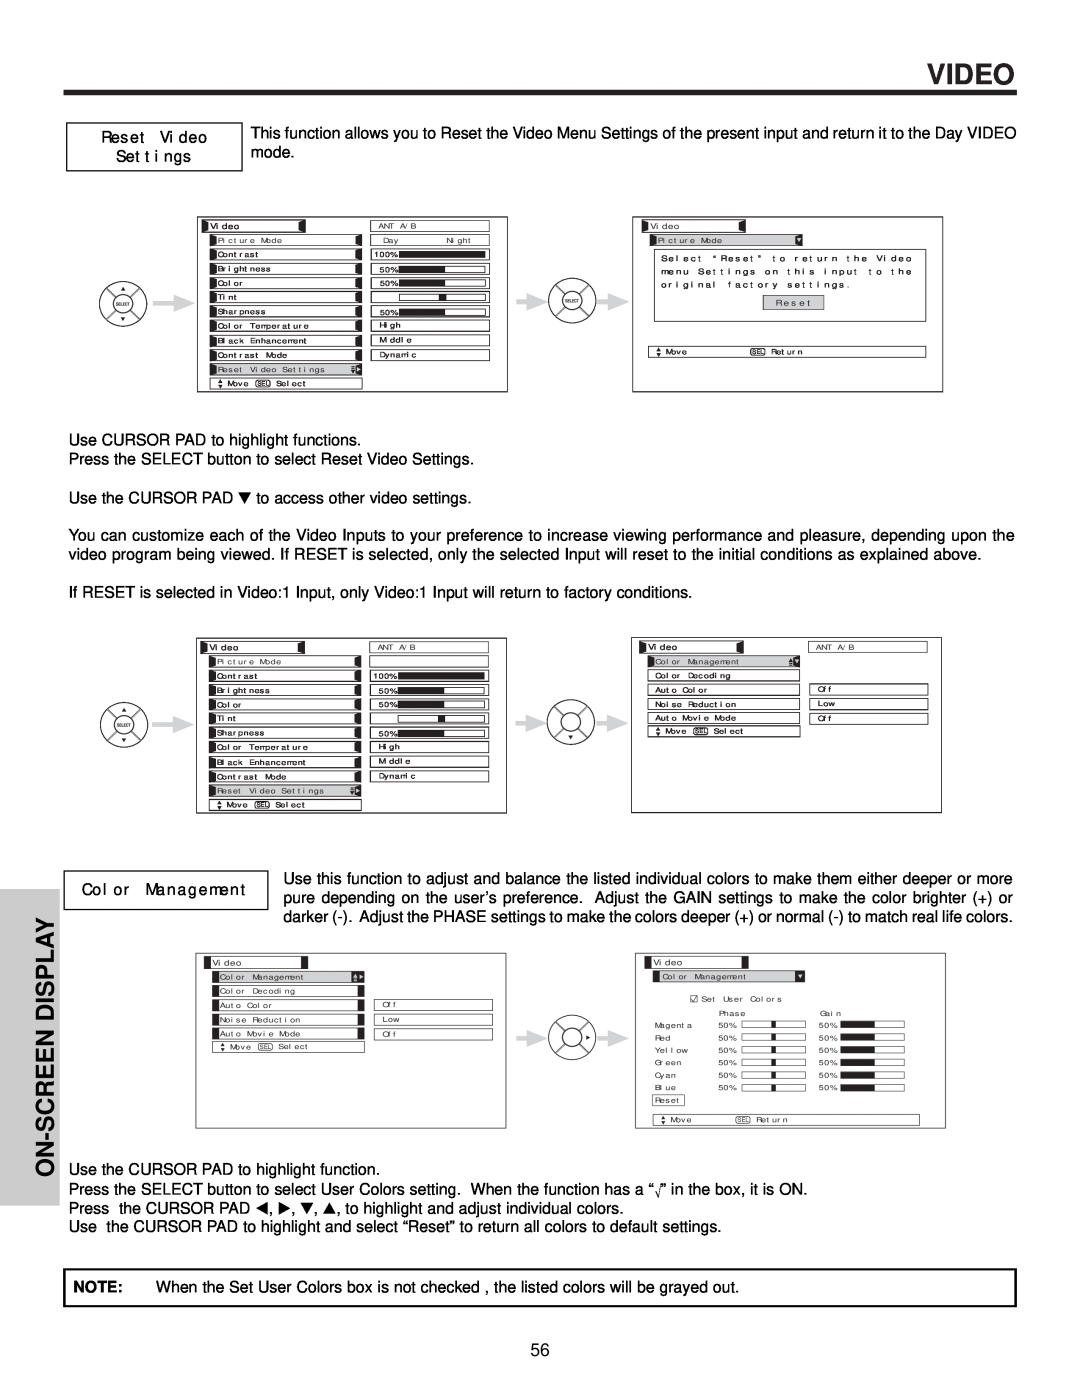 Hitachi 42HDX61, 55HDX61 important safety instructions Reset Video Settings, Color Management 